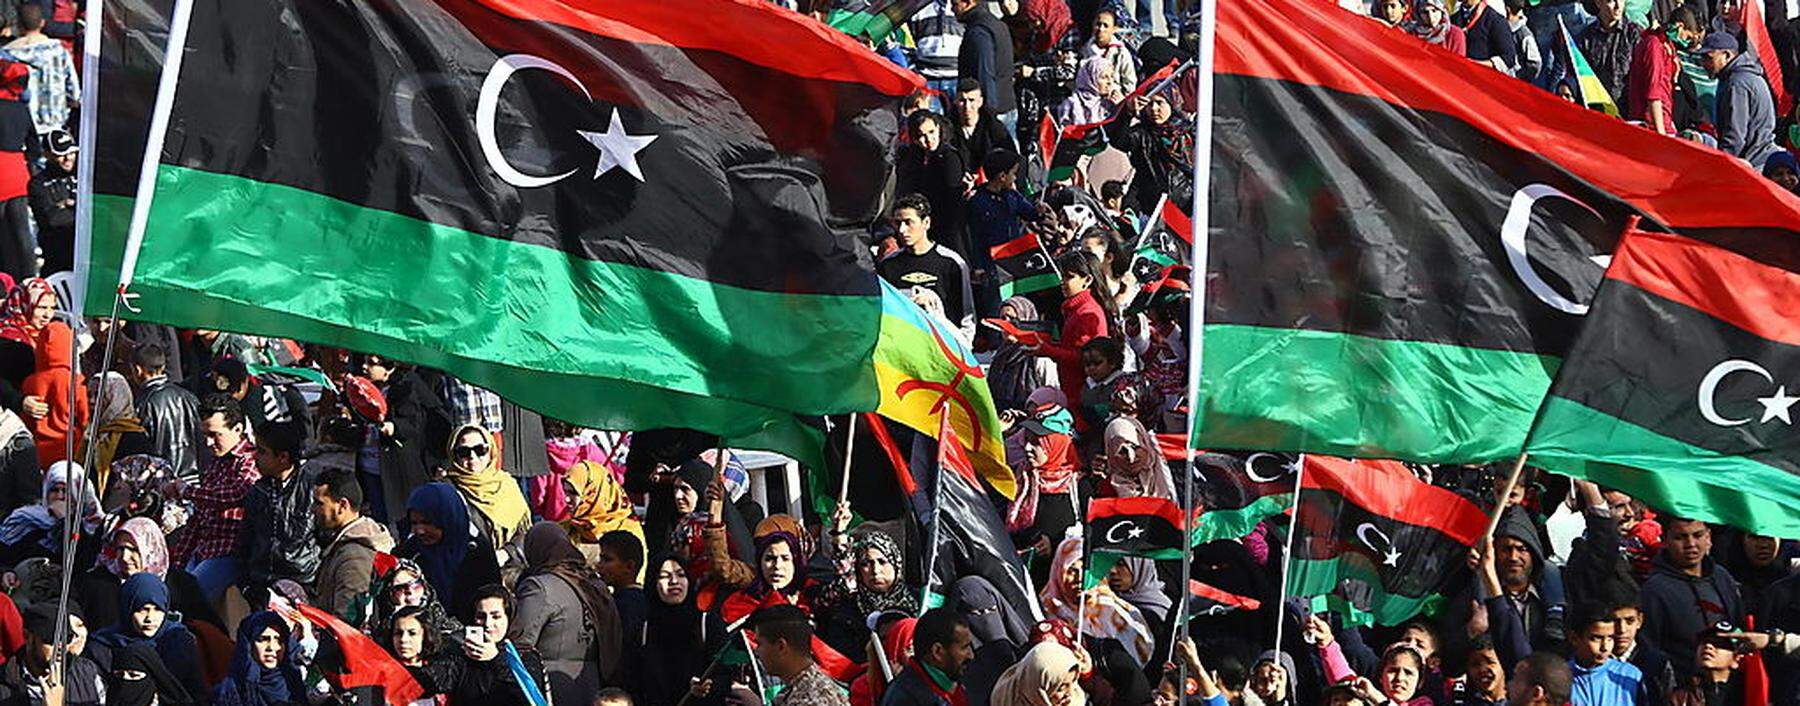 LIBYA UPRISING ANNIVERSARY